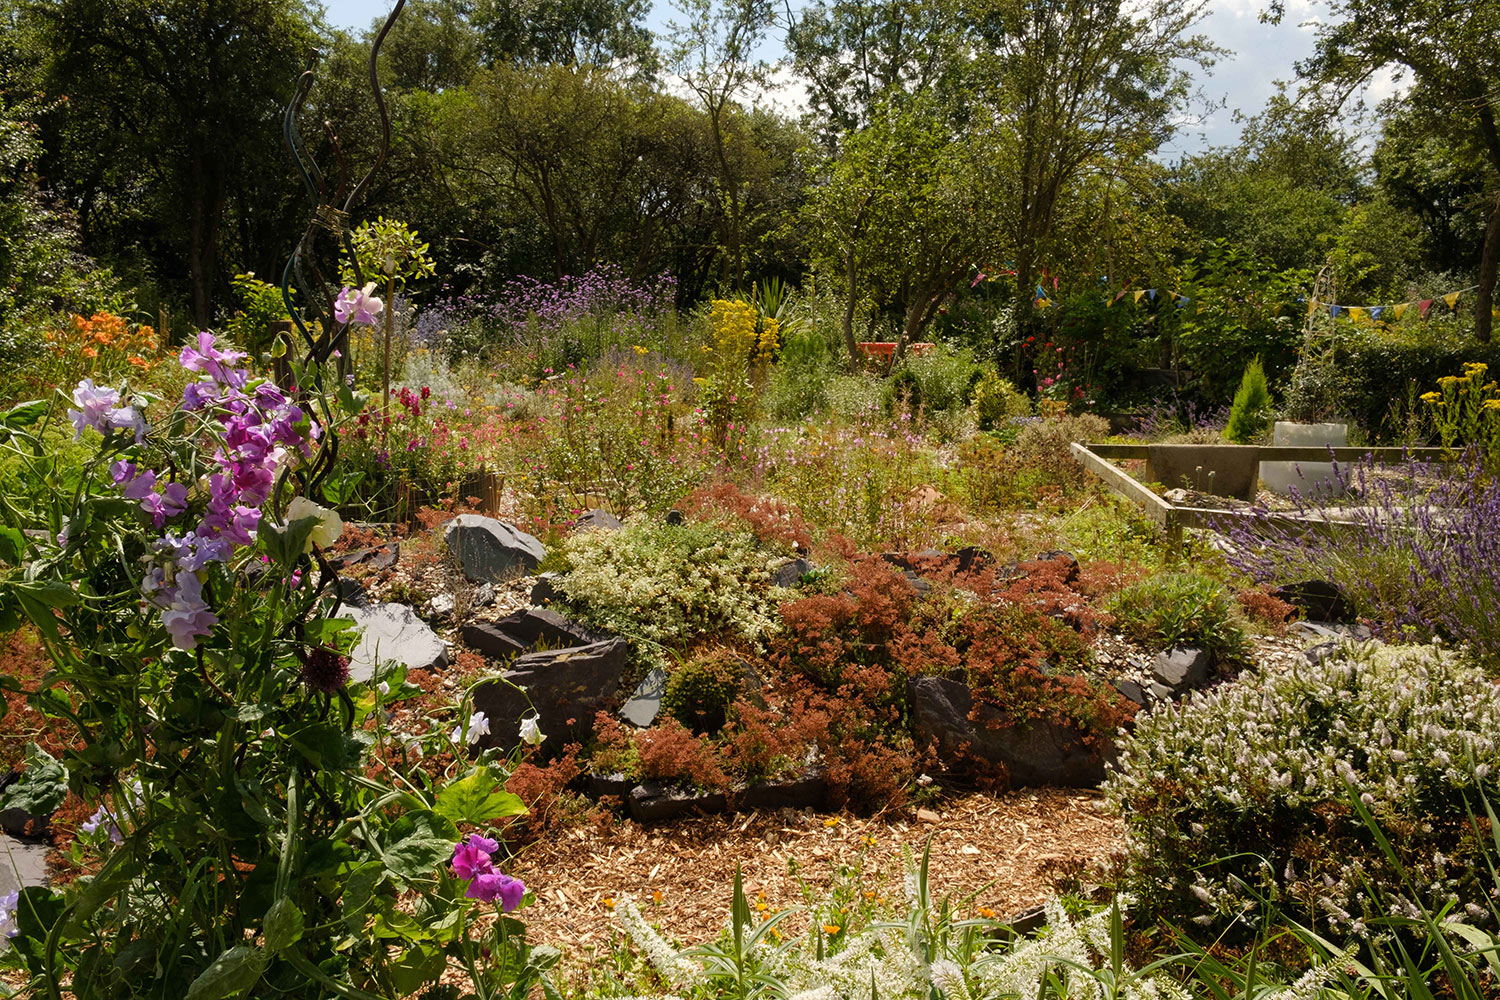 Langdon Hills community garden